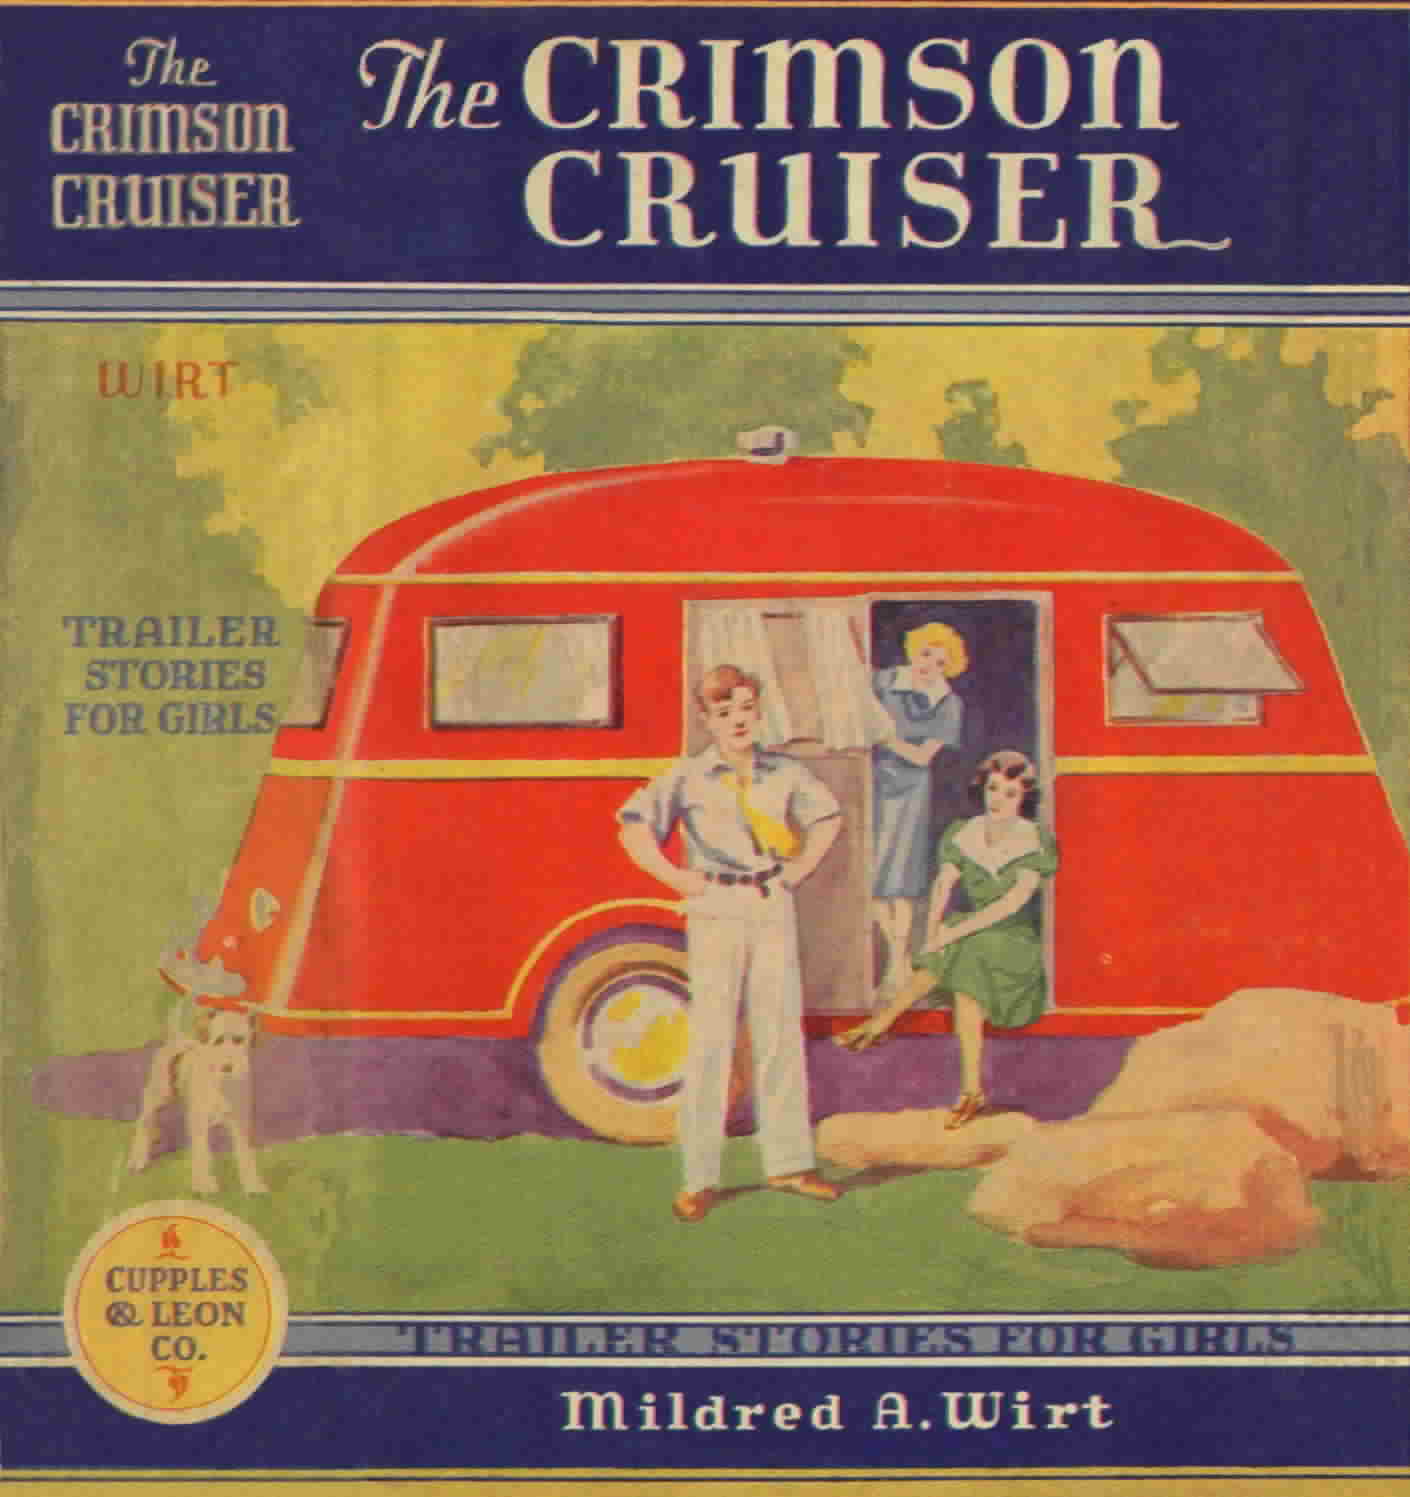 The Crimson Cruiser